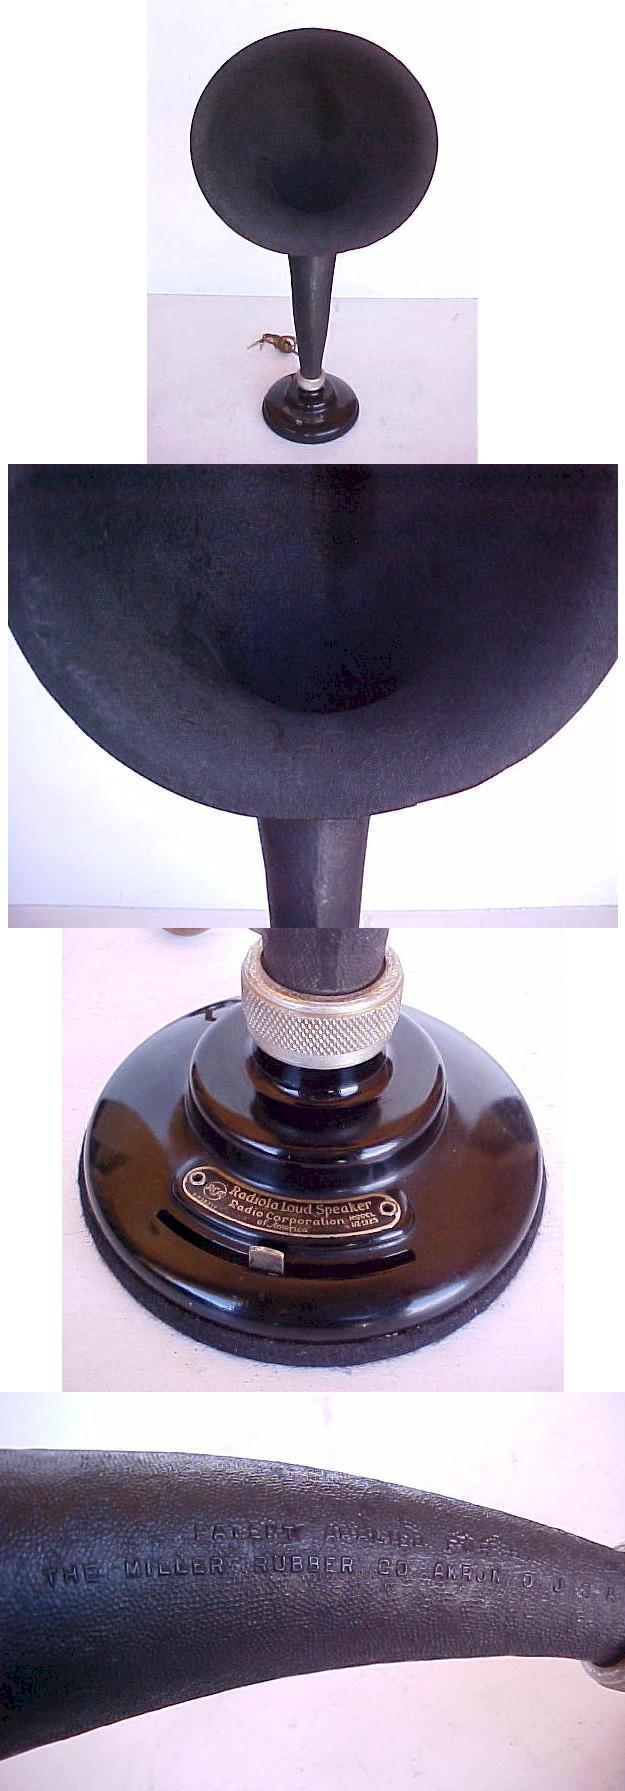 Radiola UZ-1325 Horn Speaker (1923)